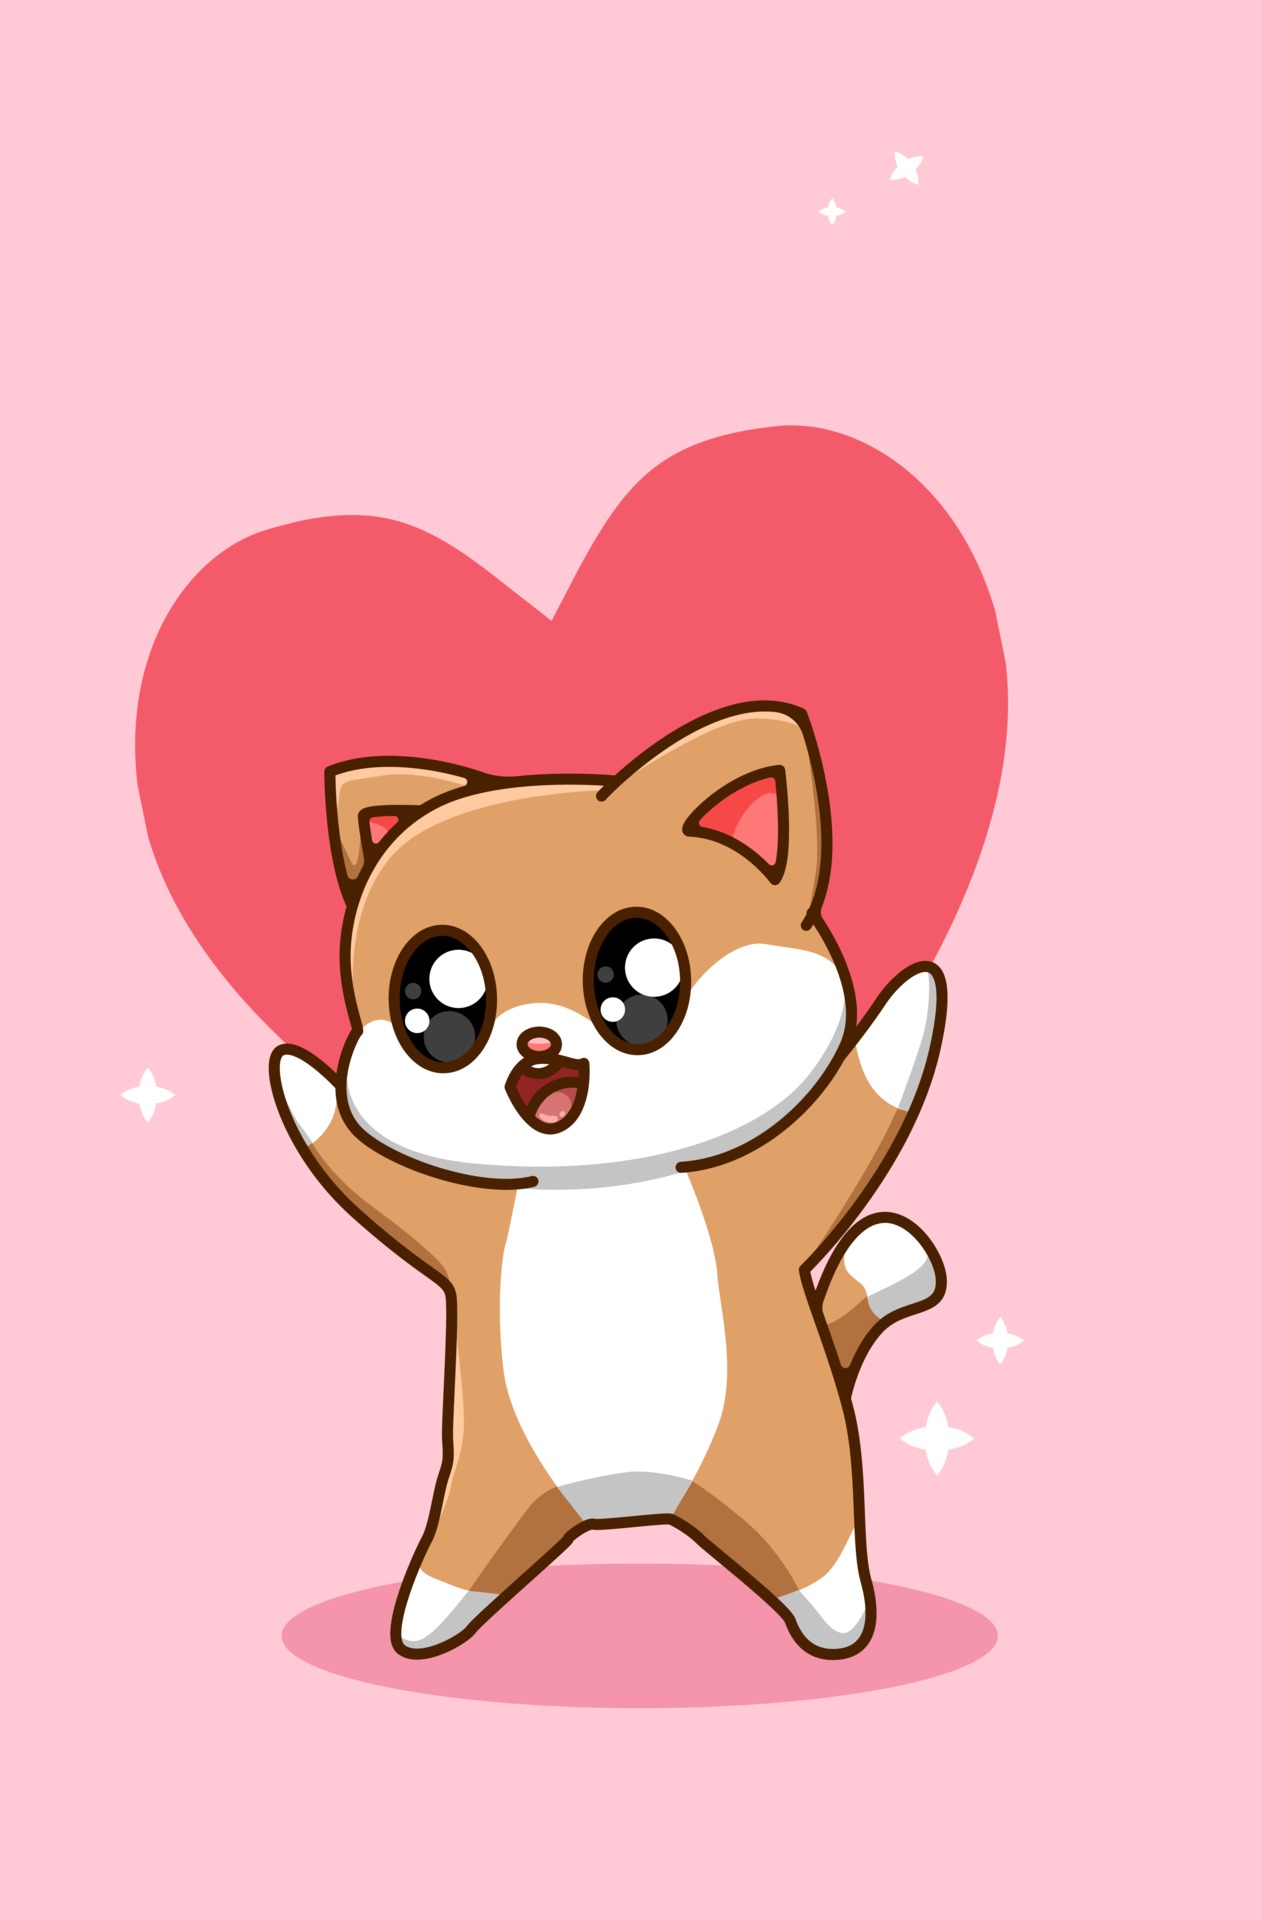 Kawaii and funny cat gives a big valentine's heart cartoon illustration